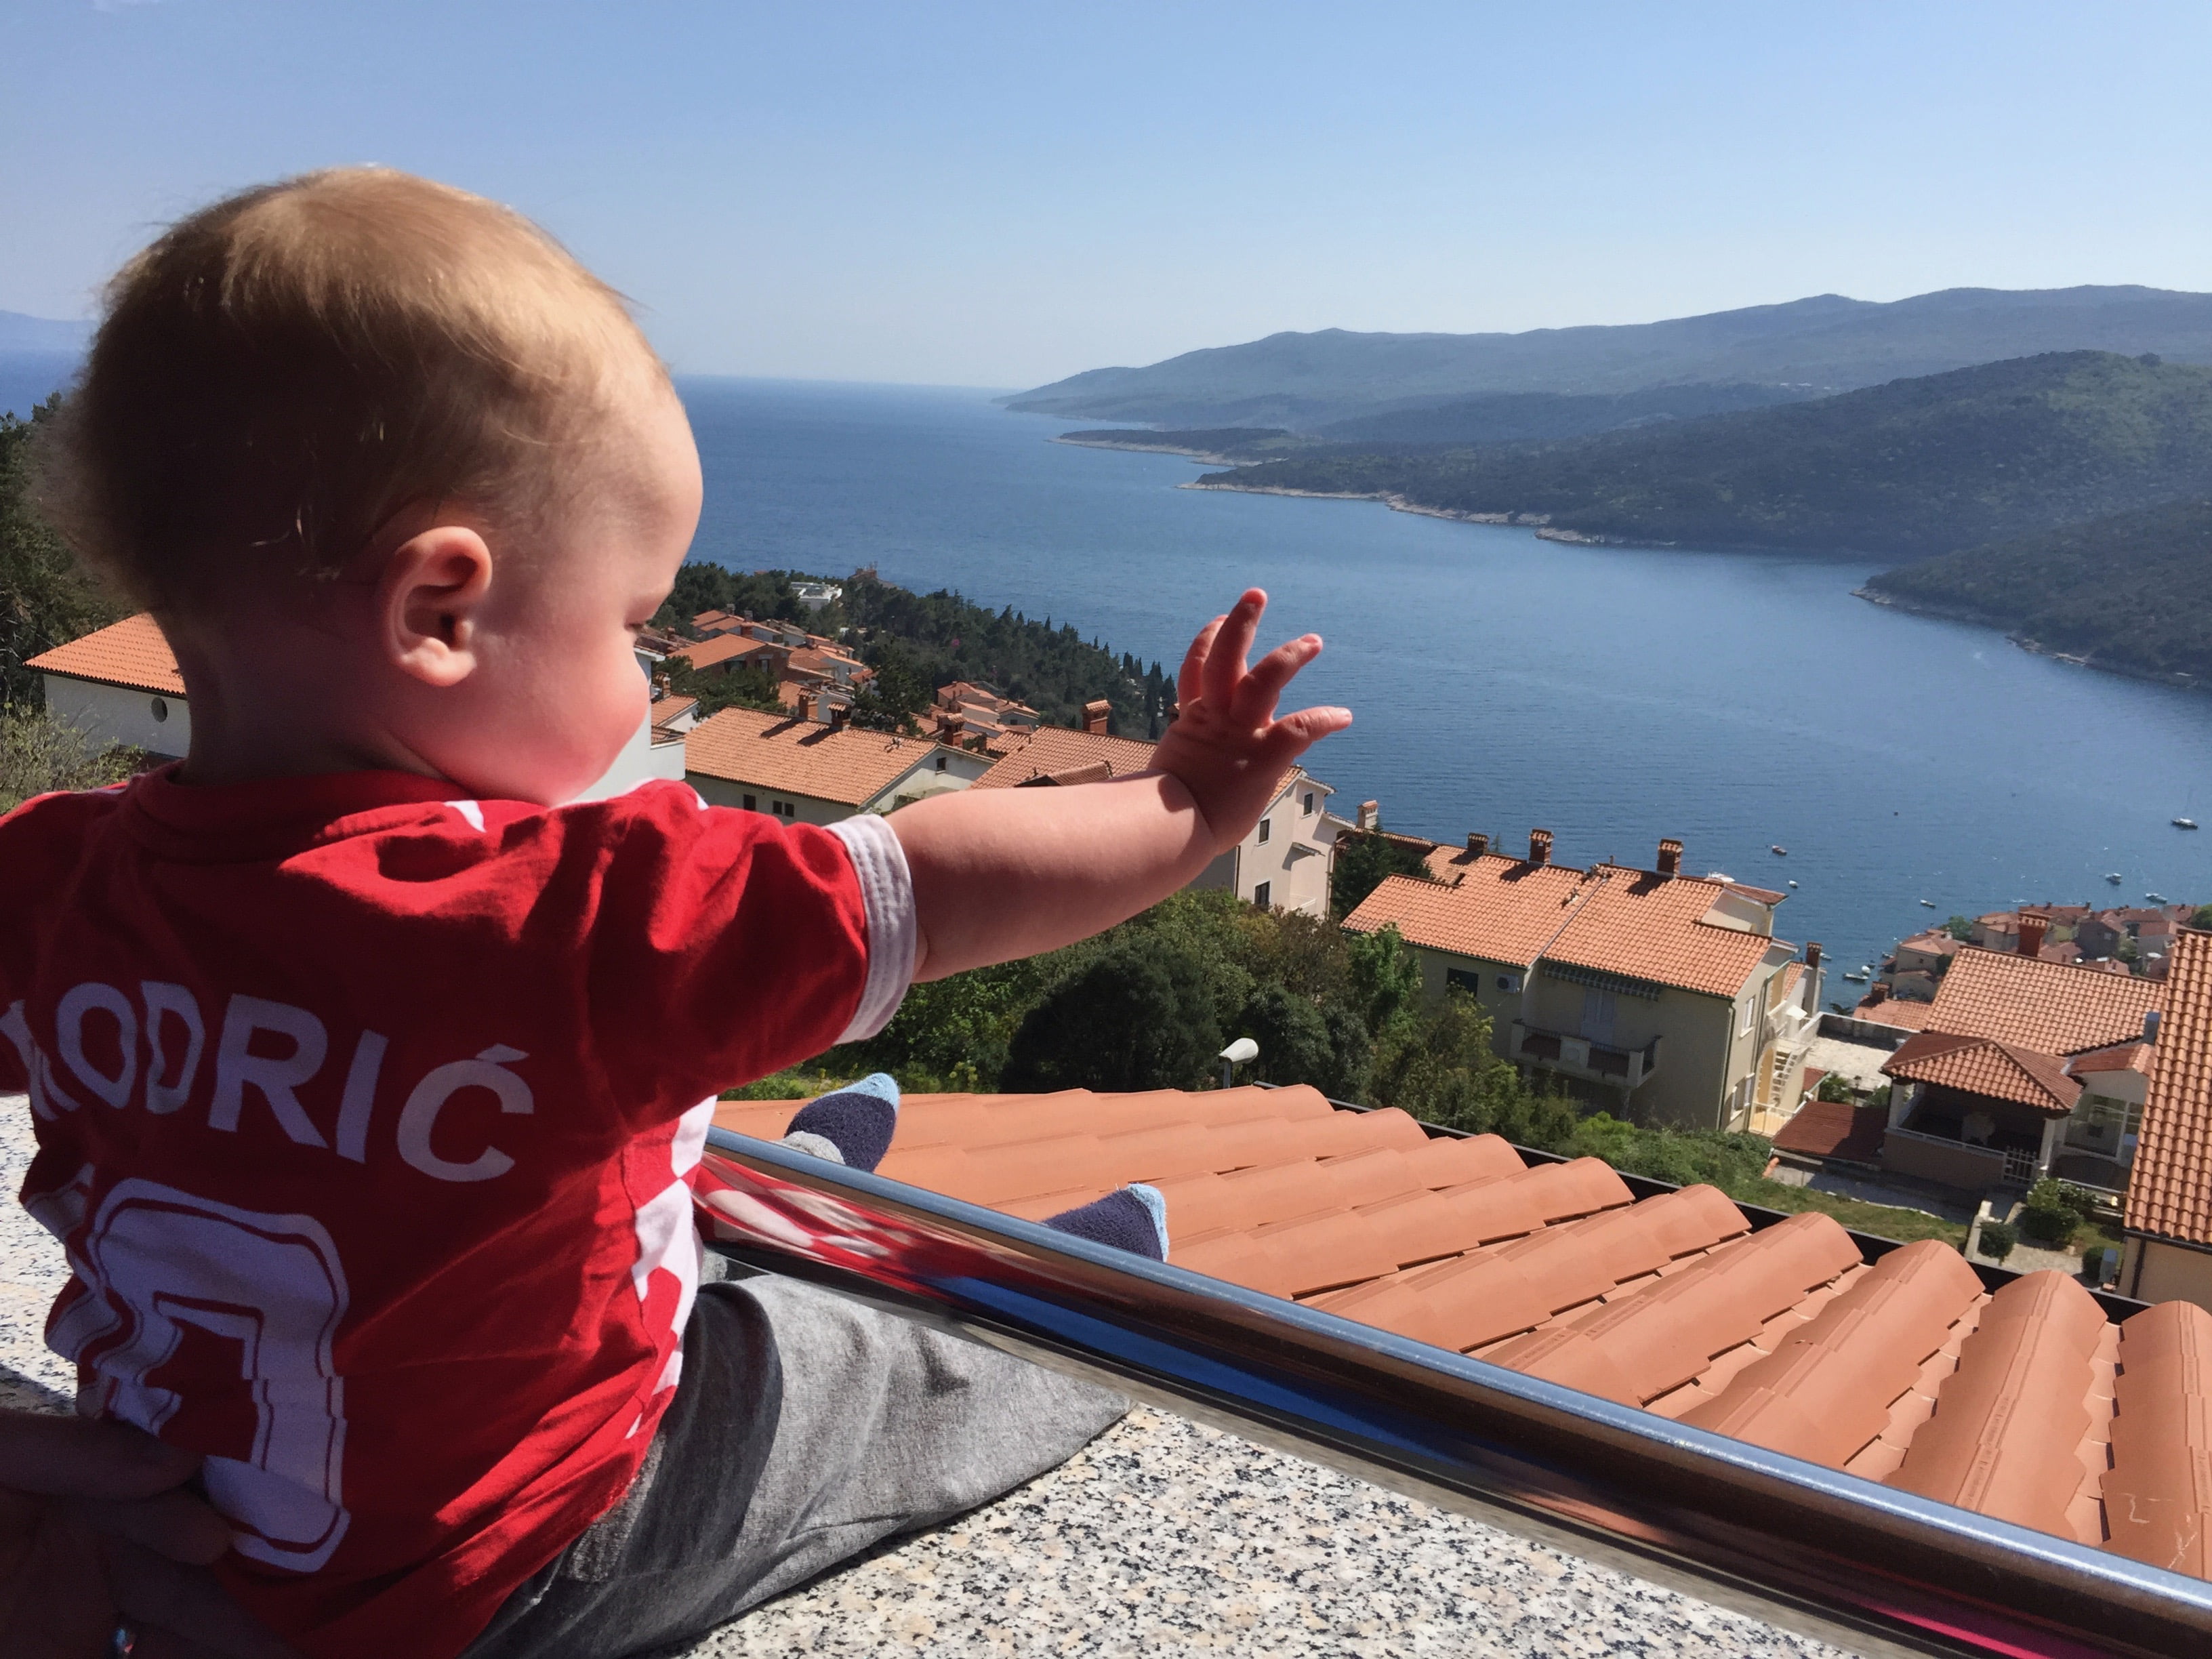 Baby Wearing Croatia Soccer Jersey Waving at View of Ocean